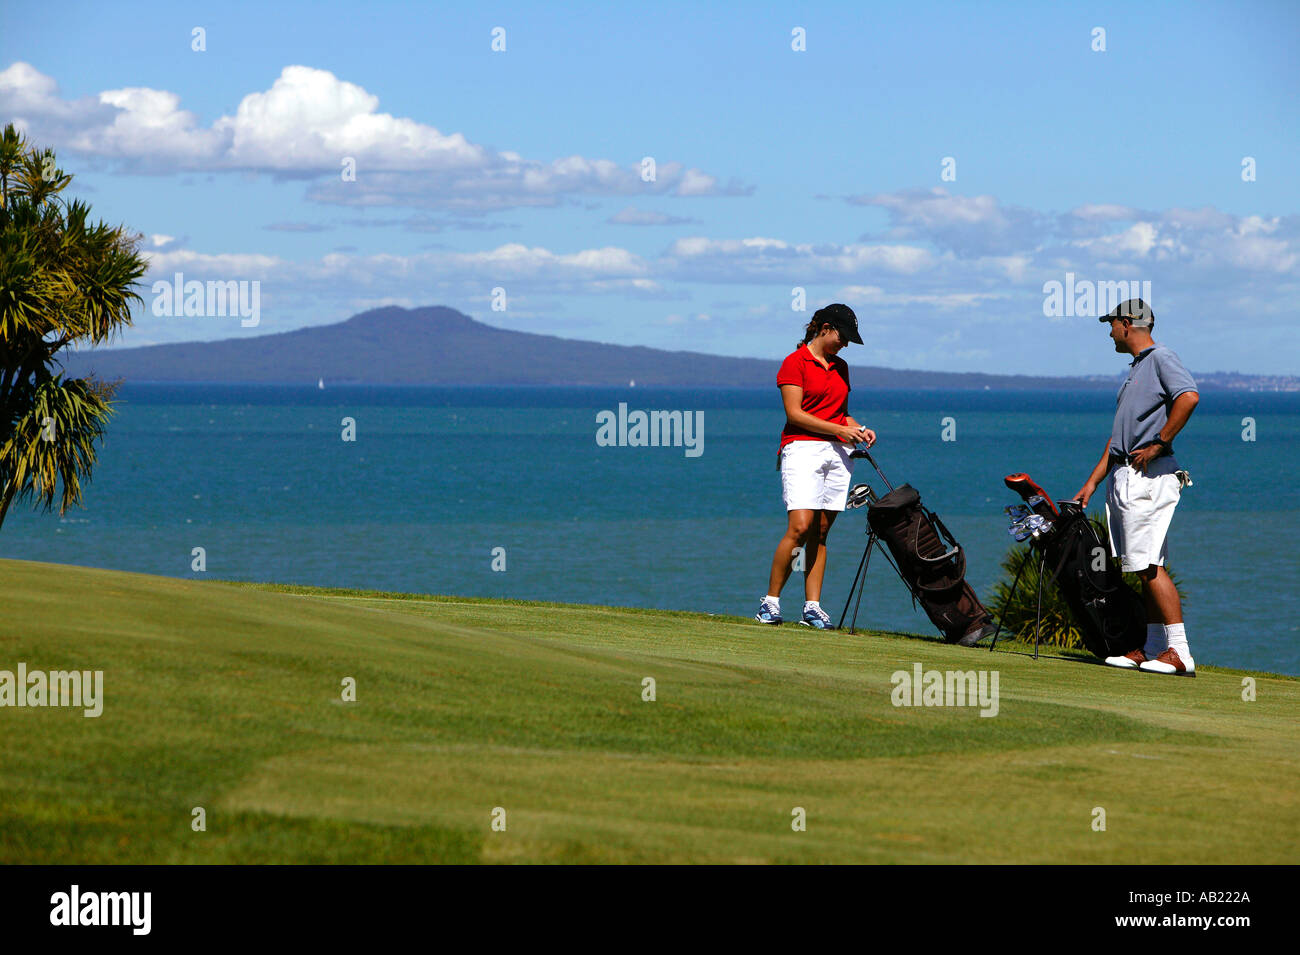 Golf at Gulf harbour Whangaparaoa New Zealand Katie Donald mr 336 Andrew Martin mr 344 Stock Photo